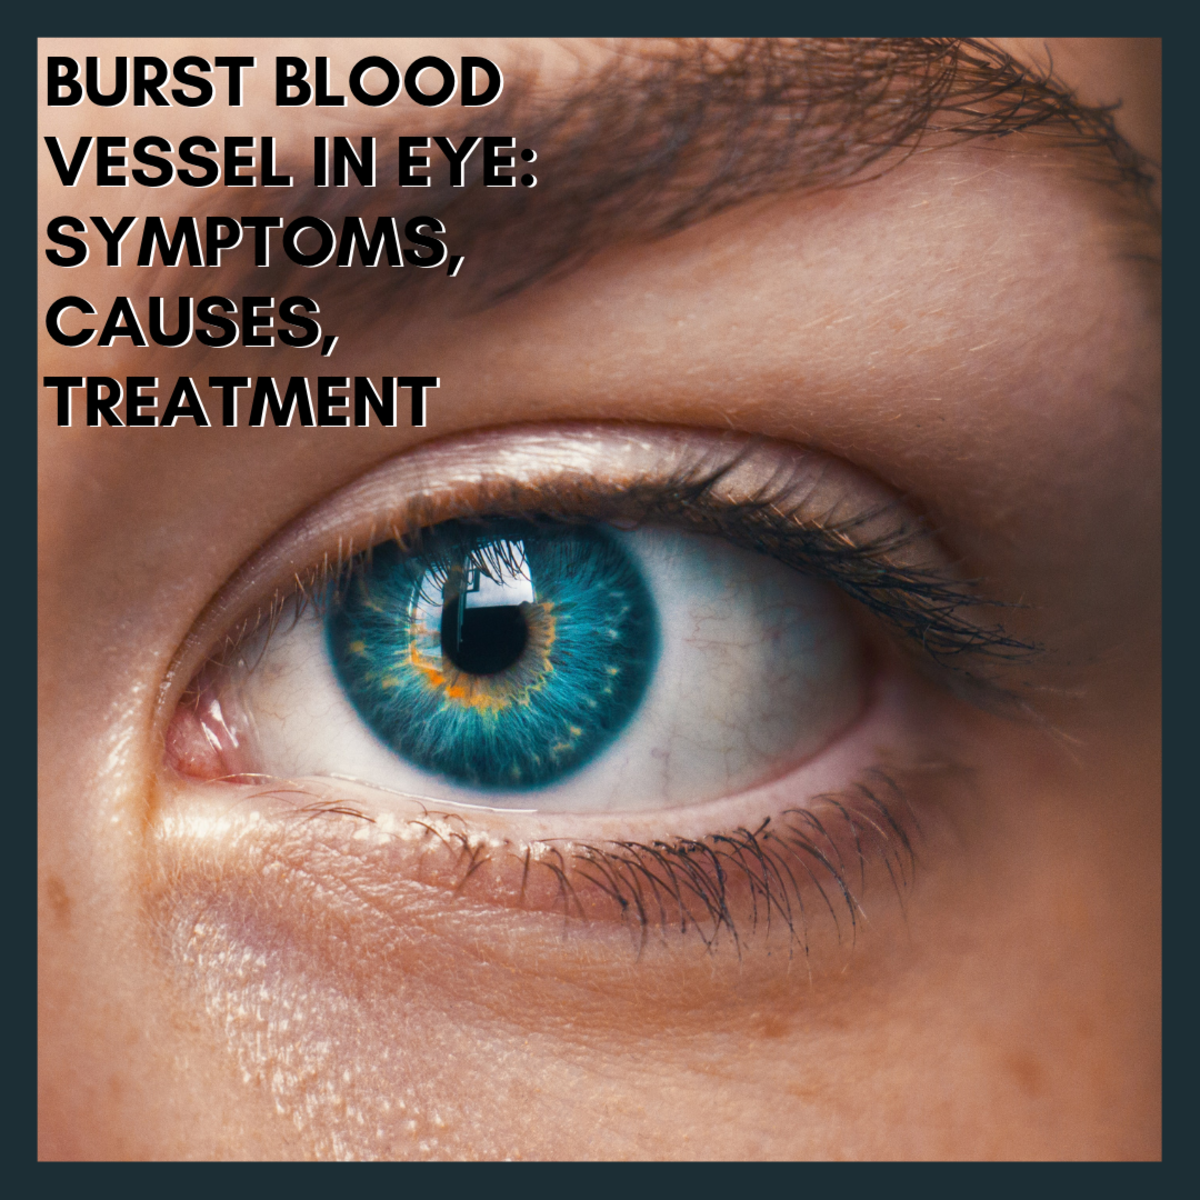 Burst Blood Vessel in Eye: Symptoms, Causes, Treatment